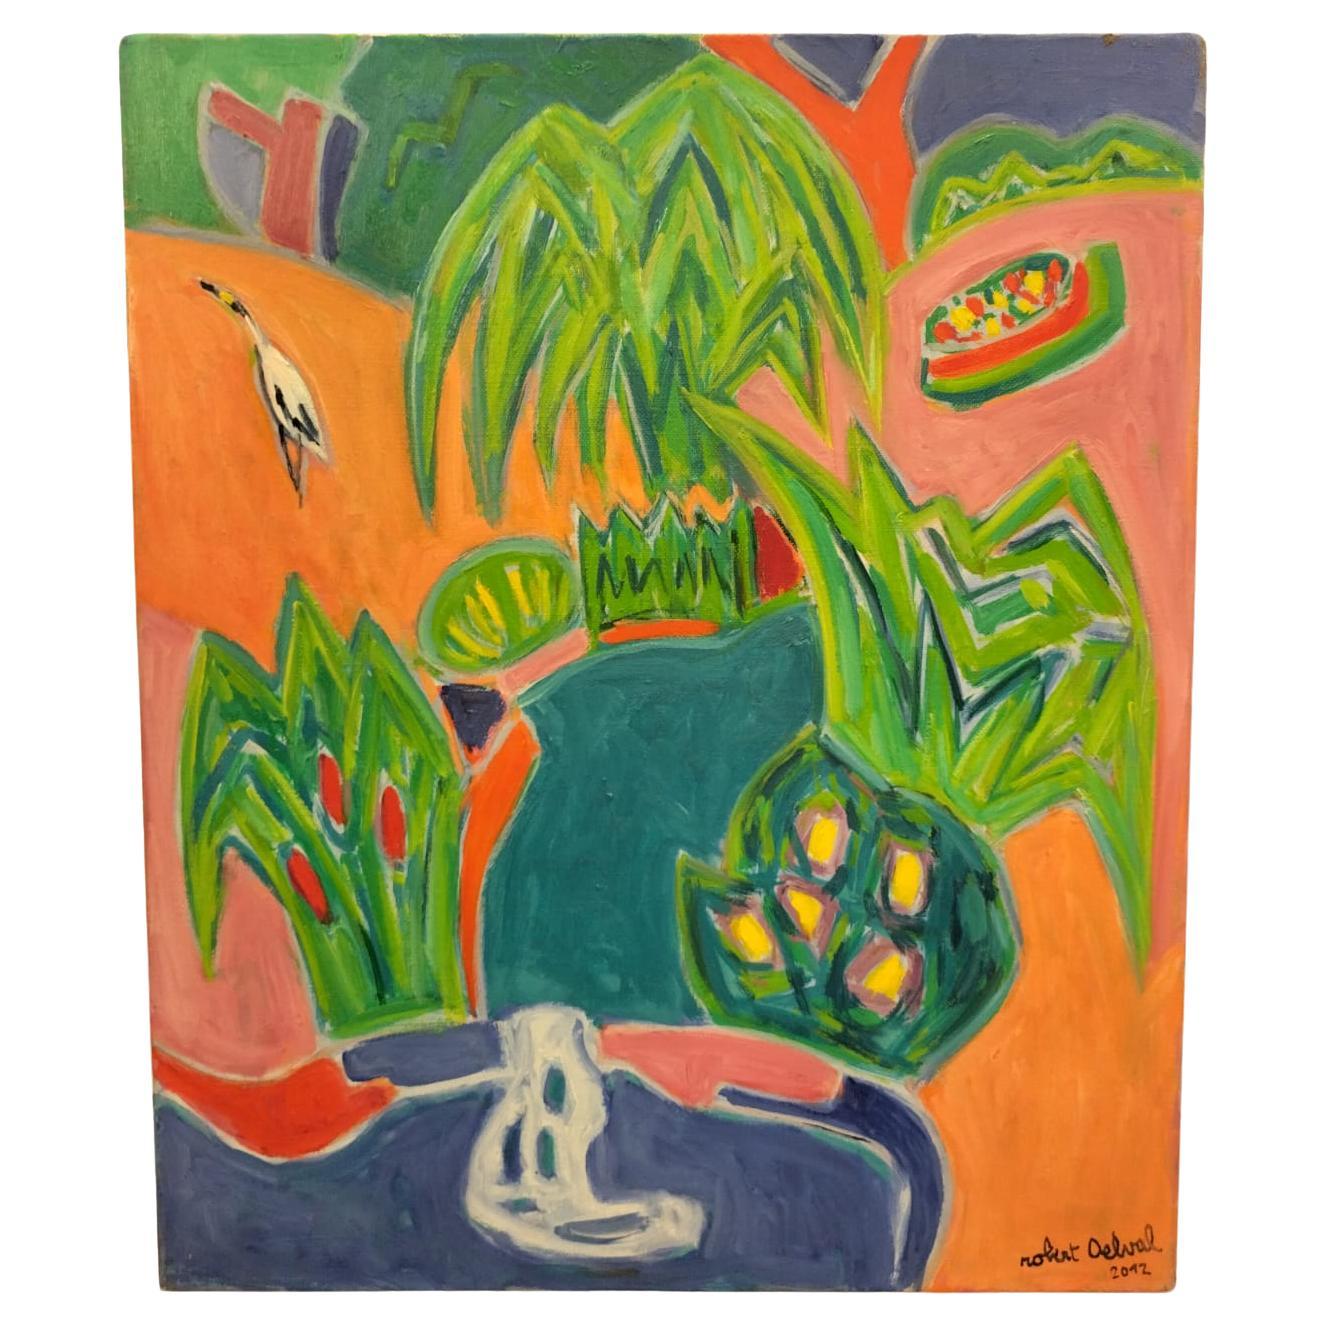 Öl auf Leinwand Gemälde „Square des Batignolles“ von Robert Delval (1934-)